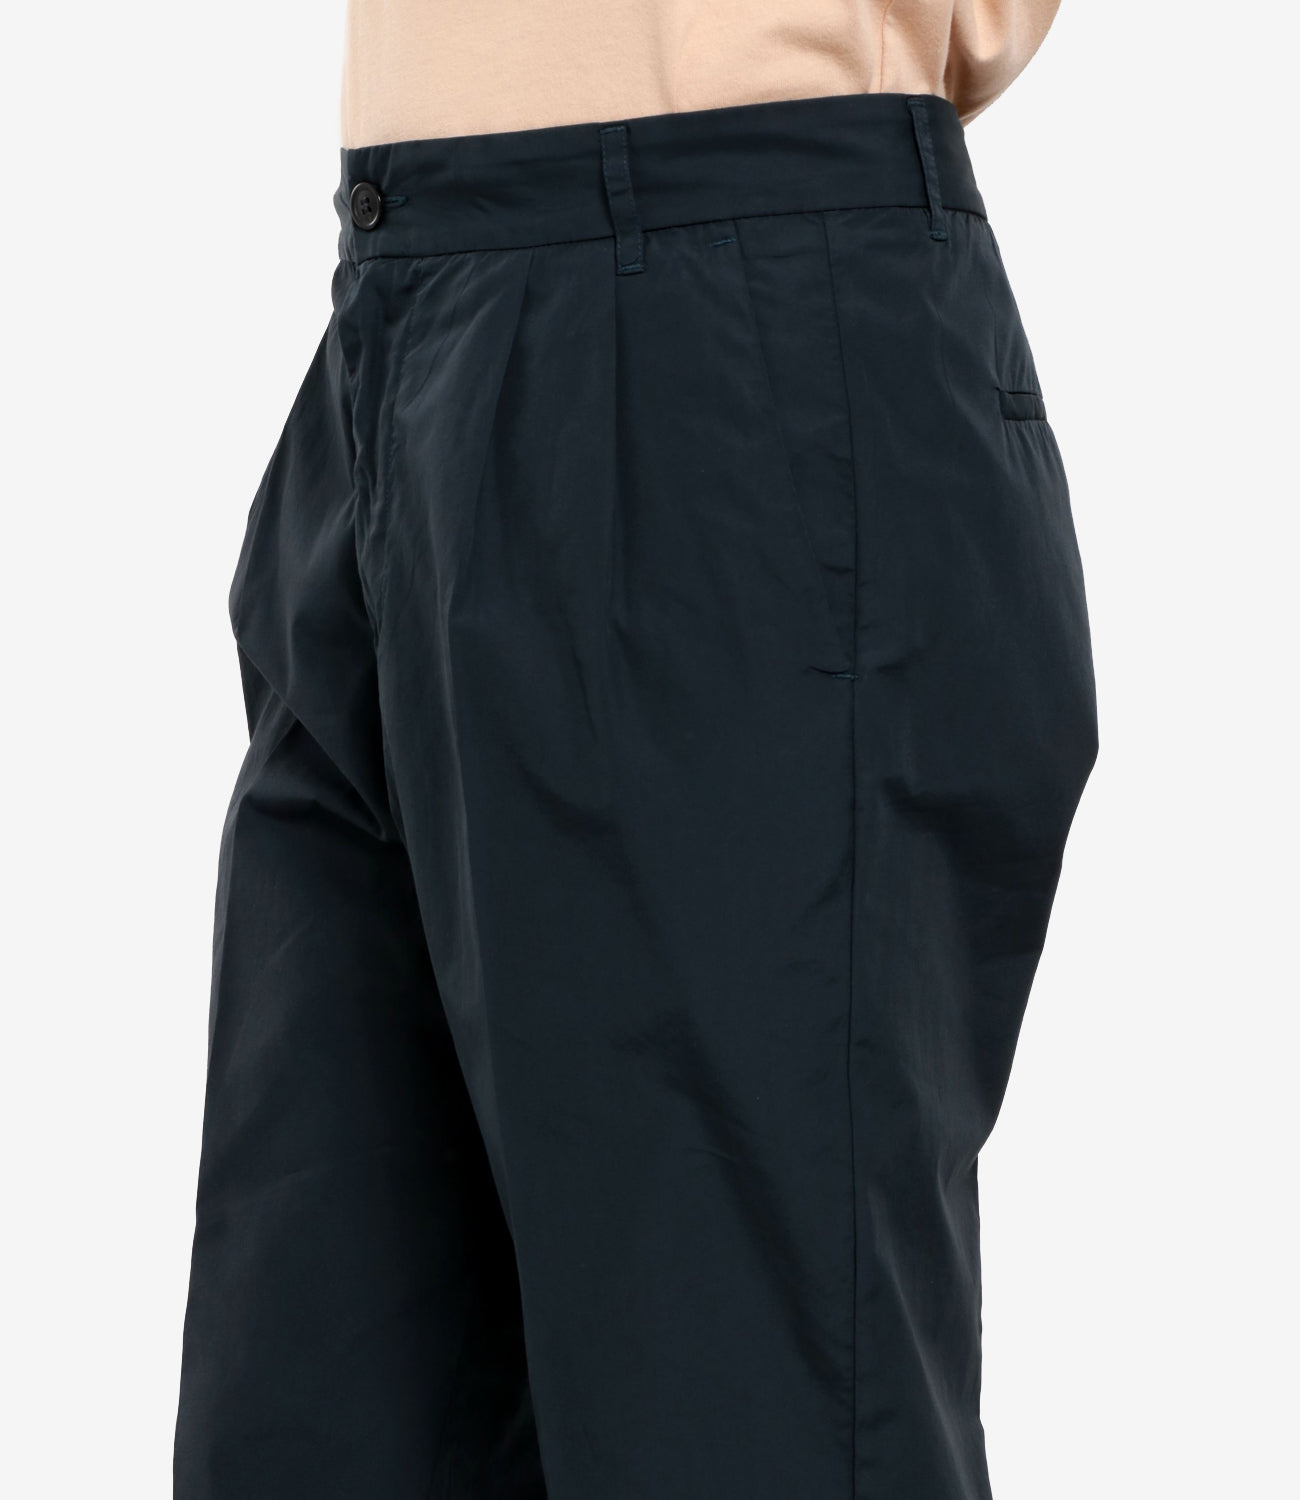 Grifoni | Pantalone Doppia Pince Navy